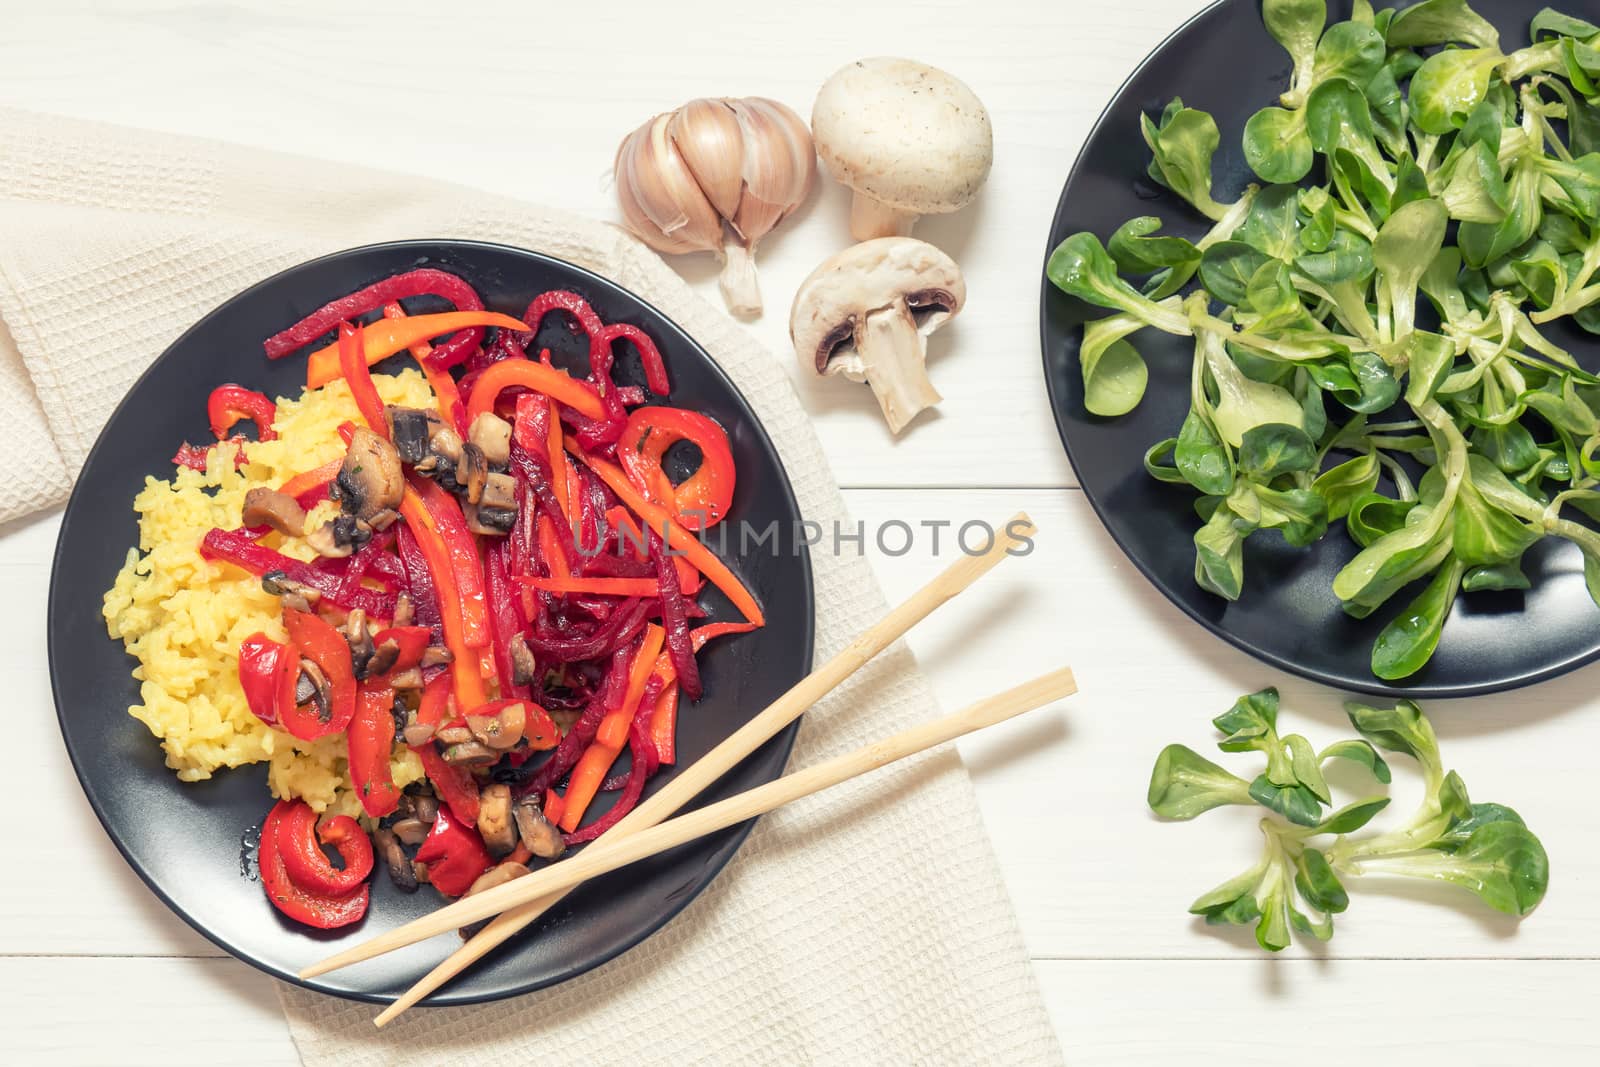 Healthy vegetarian diet concept. Rice and steamed vegetables, lamb's lettuce feldsalat on a black plates, chopsticks, napkin, garlic, mushrooms. White wooden table.